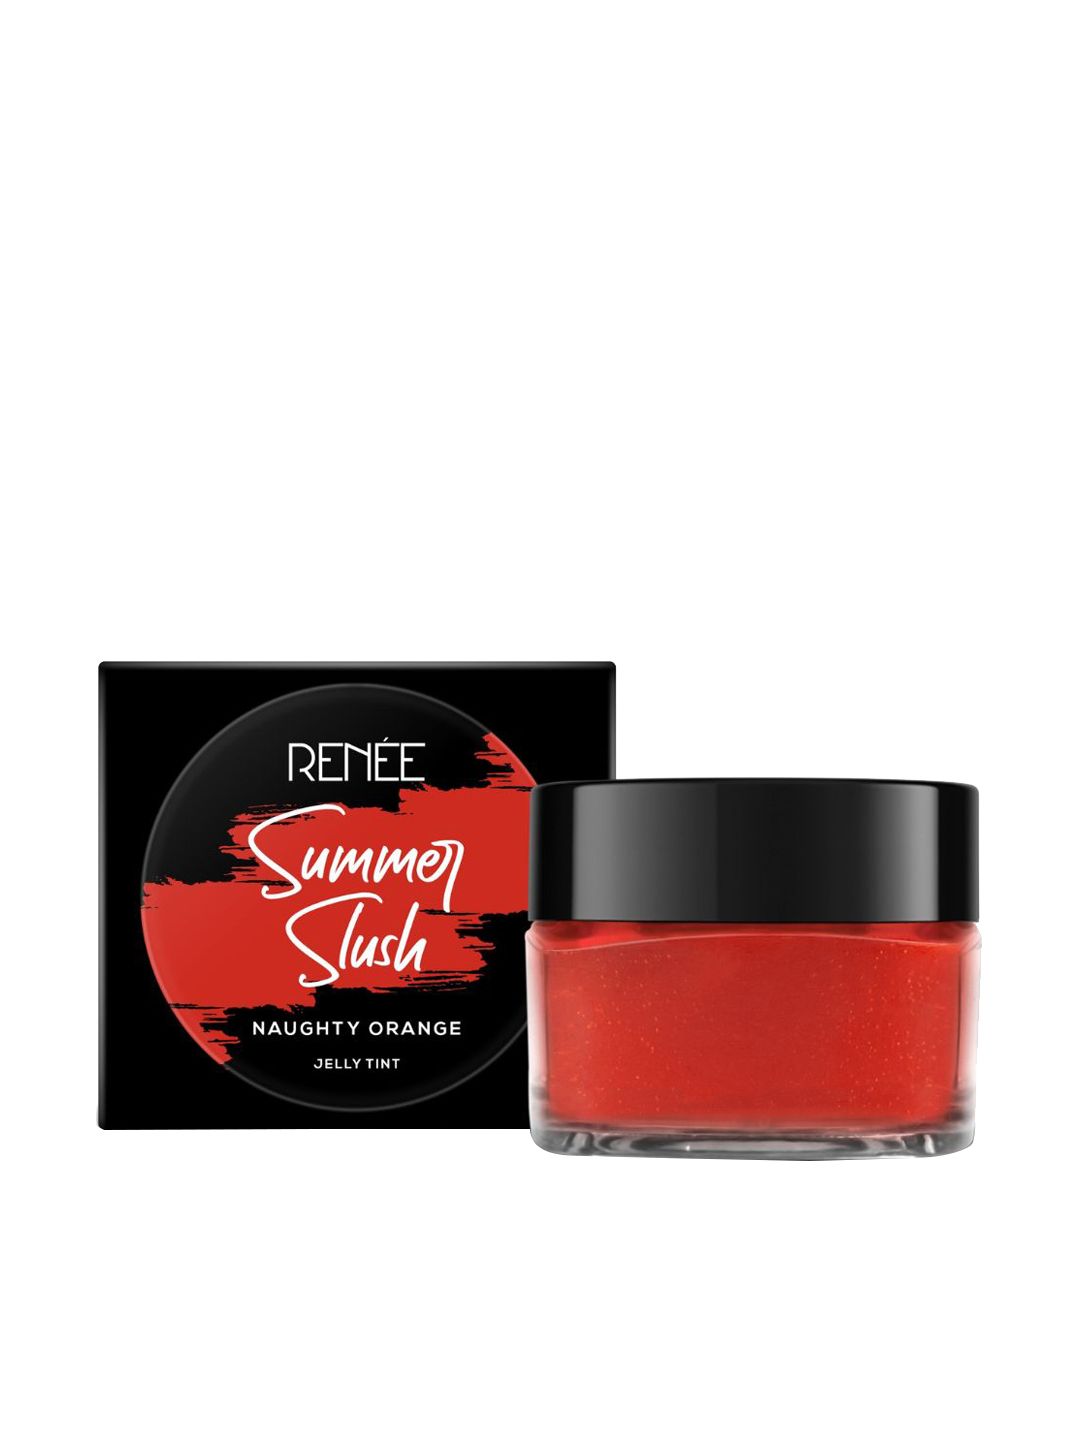 RENEE Summer Slush Jelly Tint - Naughty Orange 13g Price in India